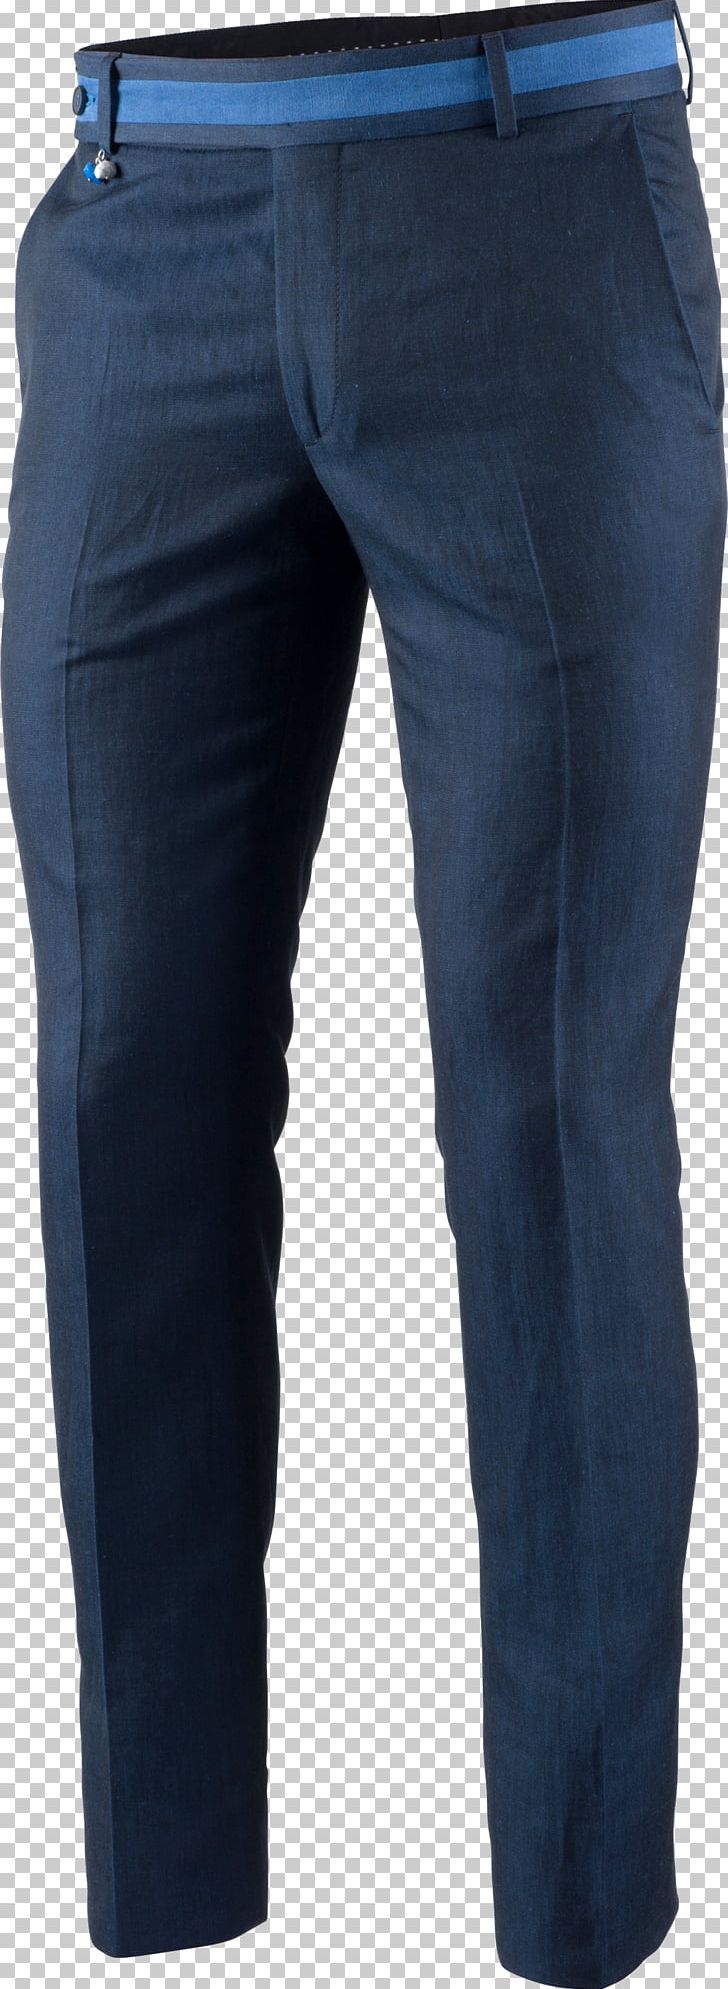 Jeans Denim Slim-fit Pants Pocket Clothing PNG, Clipart, Clothing, Coat, Denim, Electric Blue, Jeans Free PNG Download